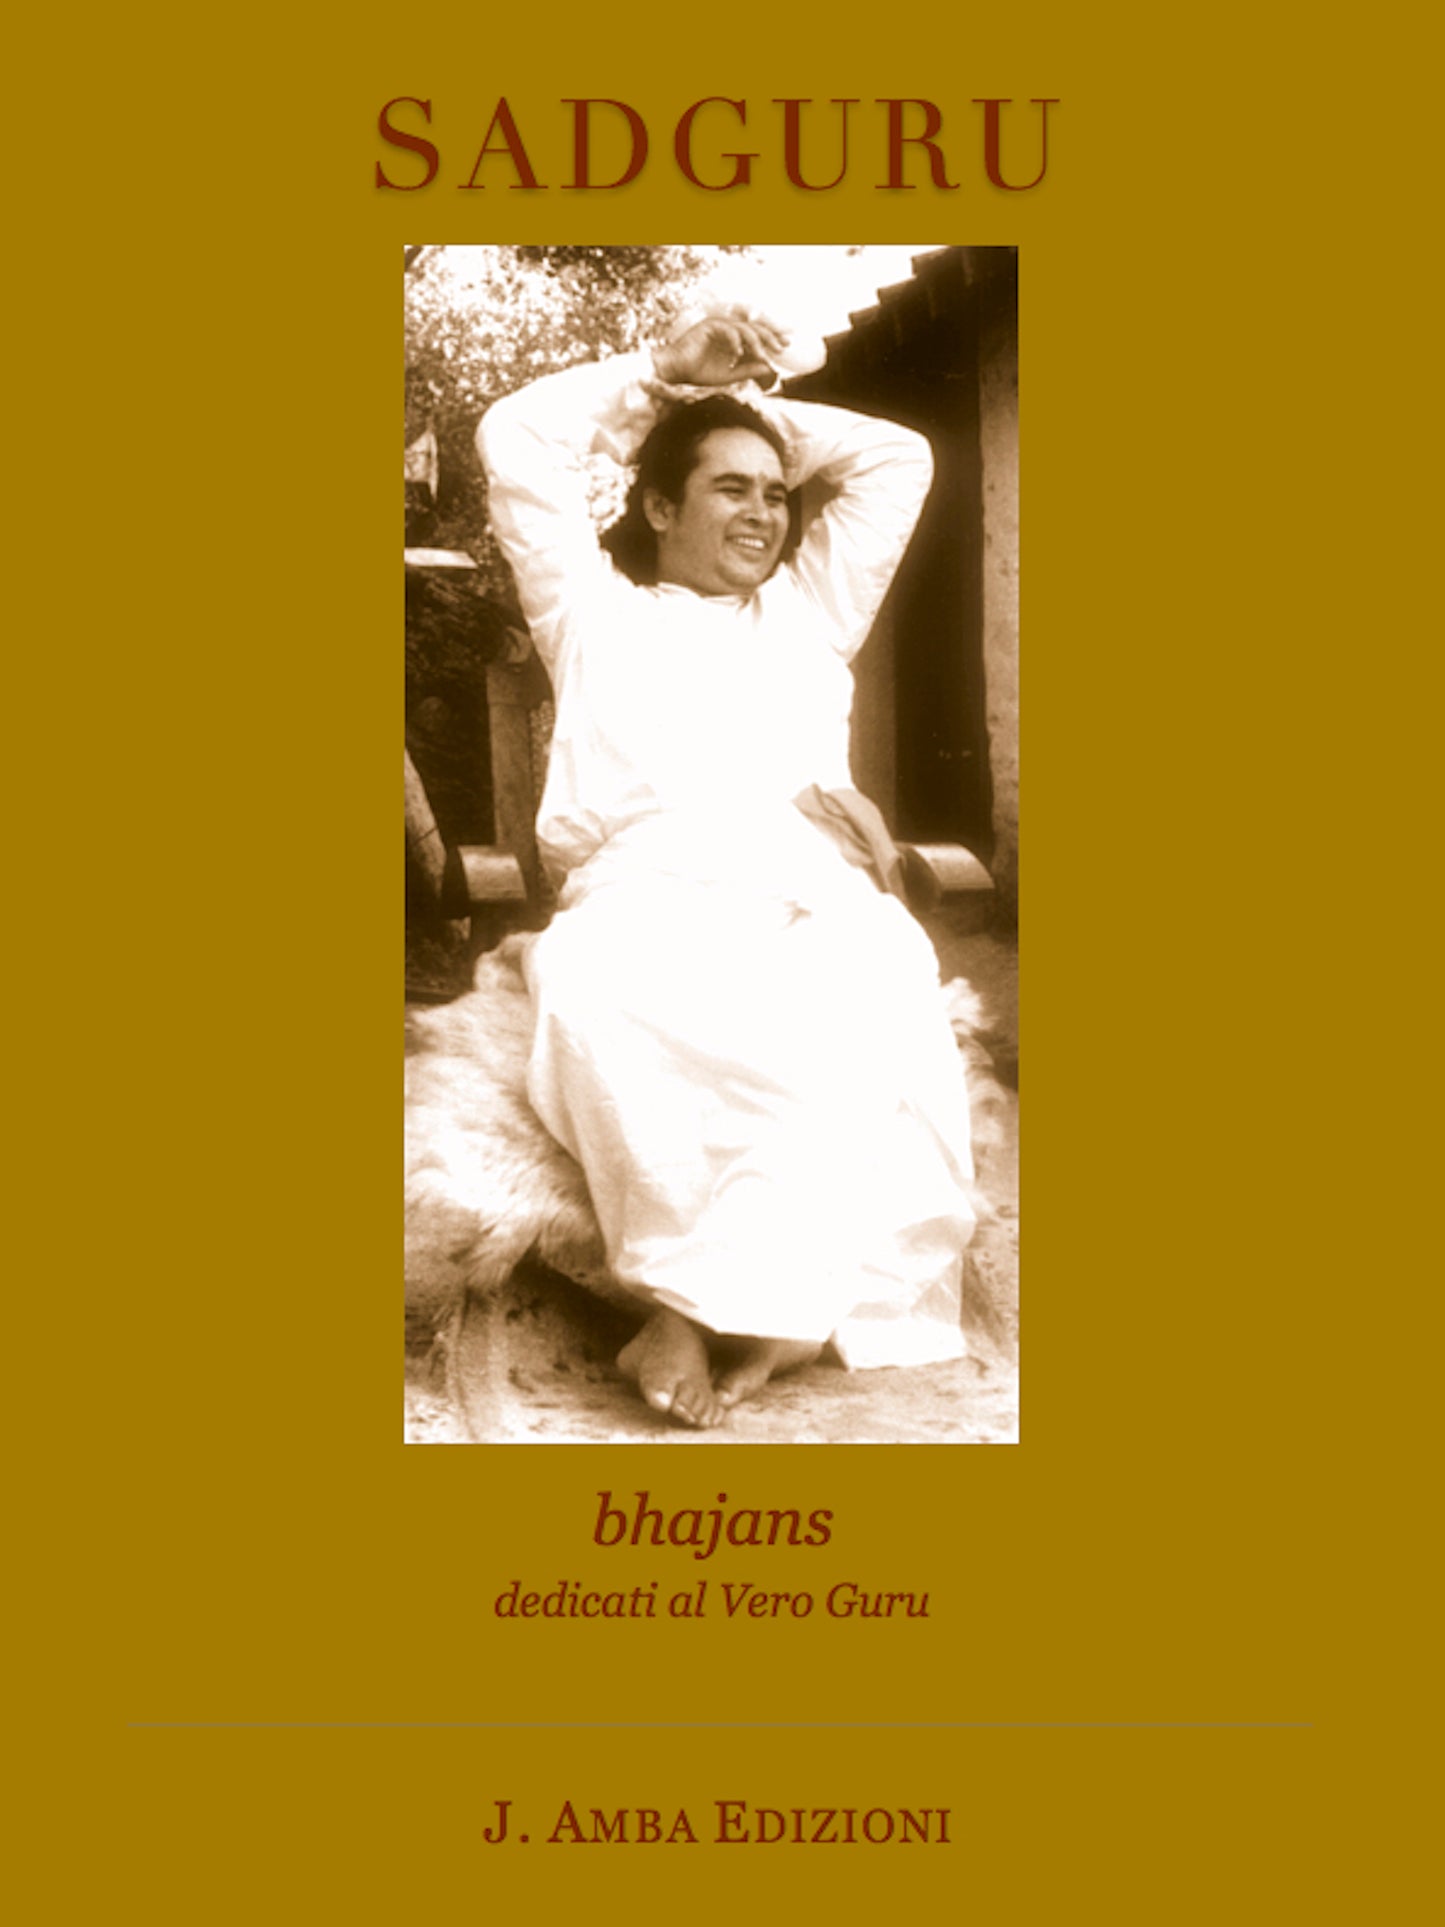 Sadguru, The True Teacher, Bhajans - Sanatan Dharma Spirituality Meditation